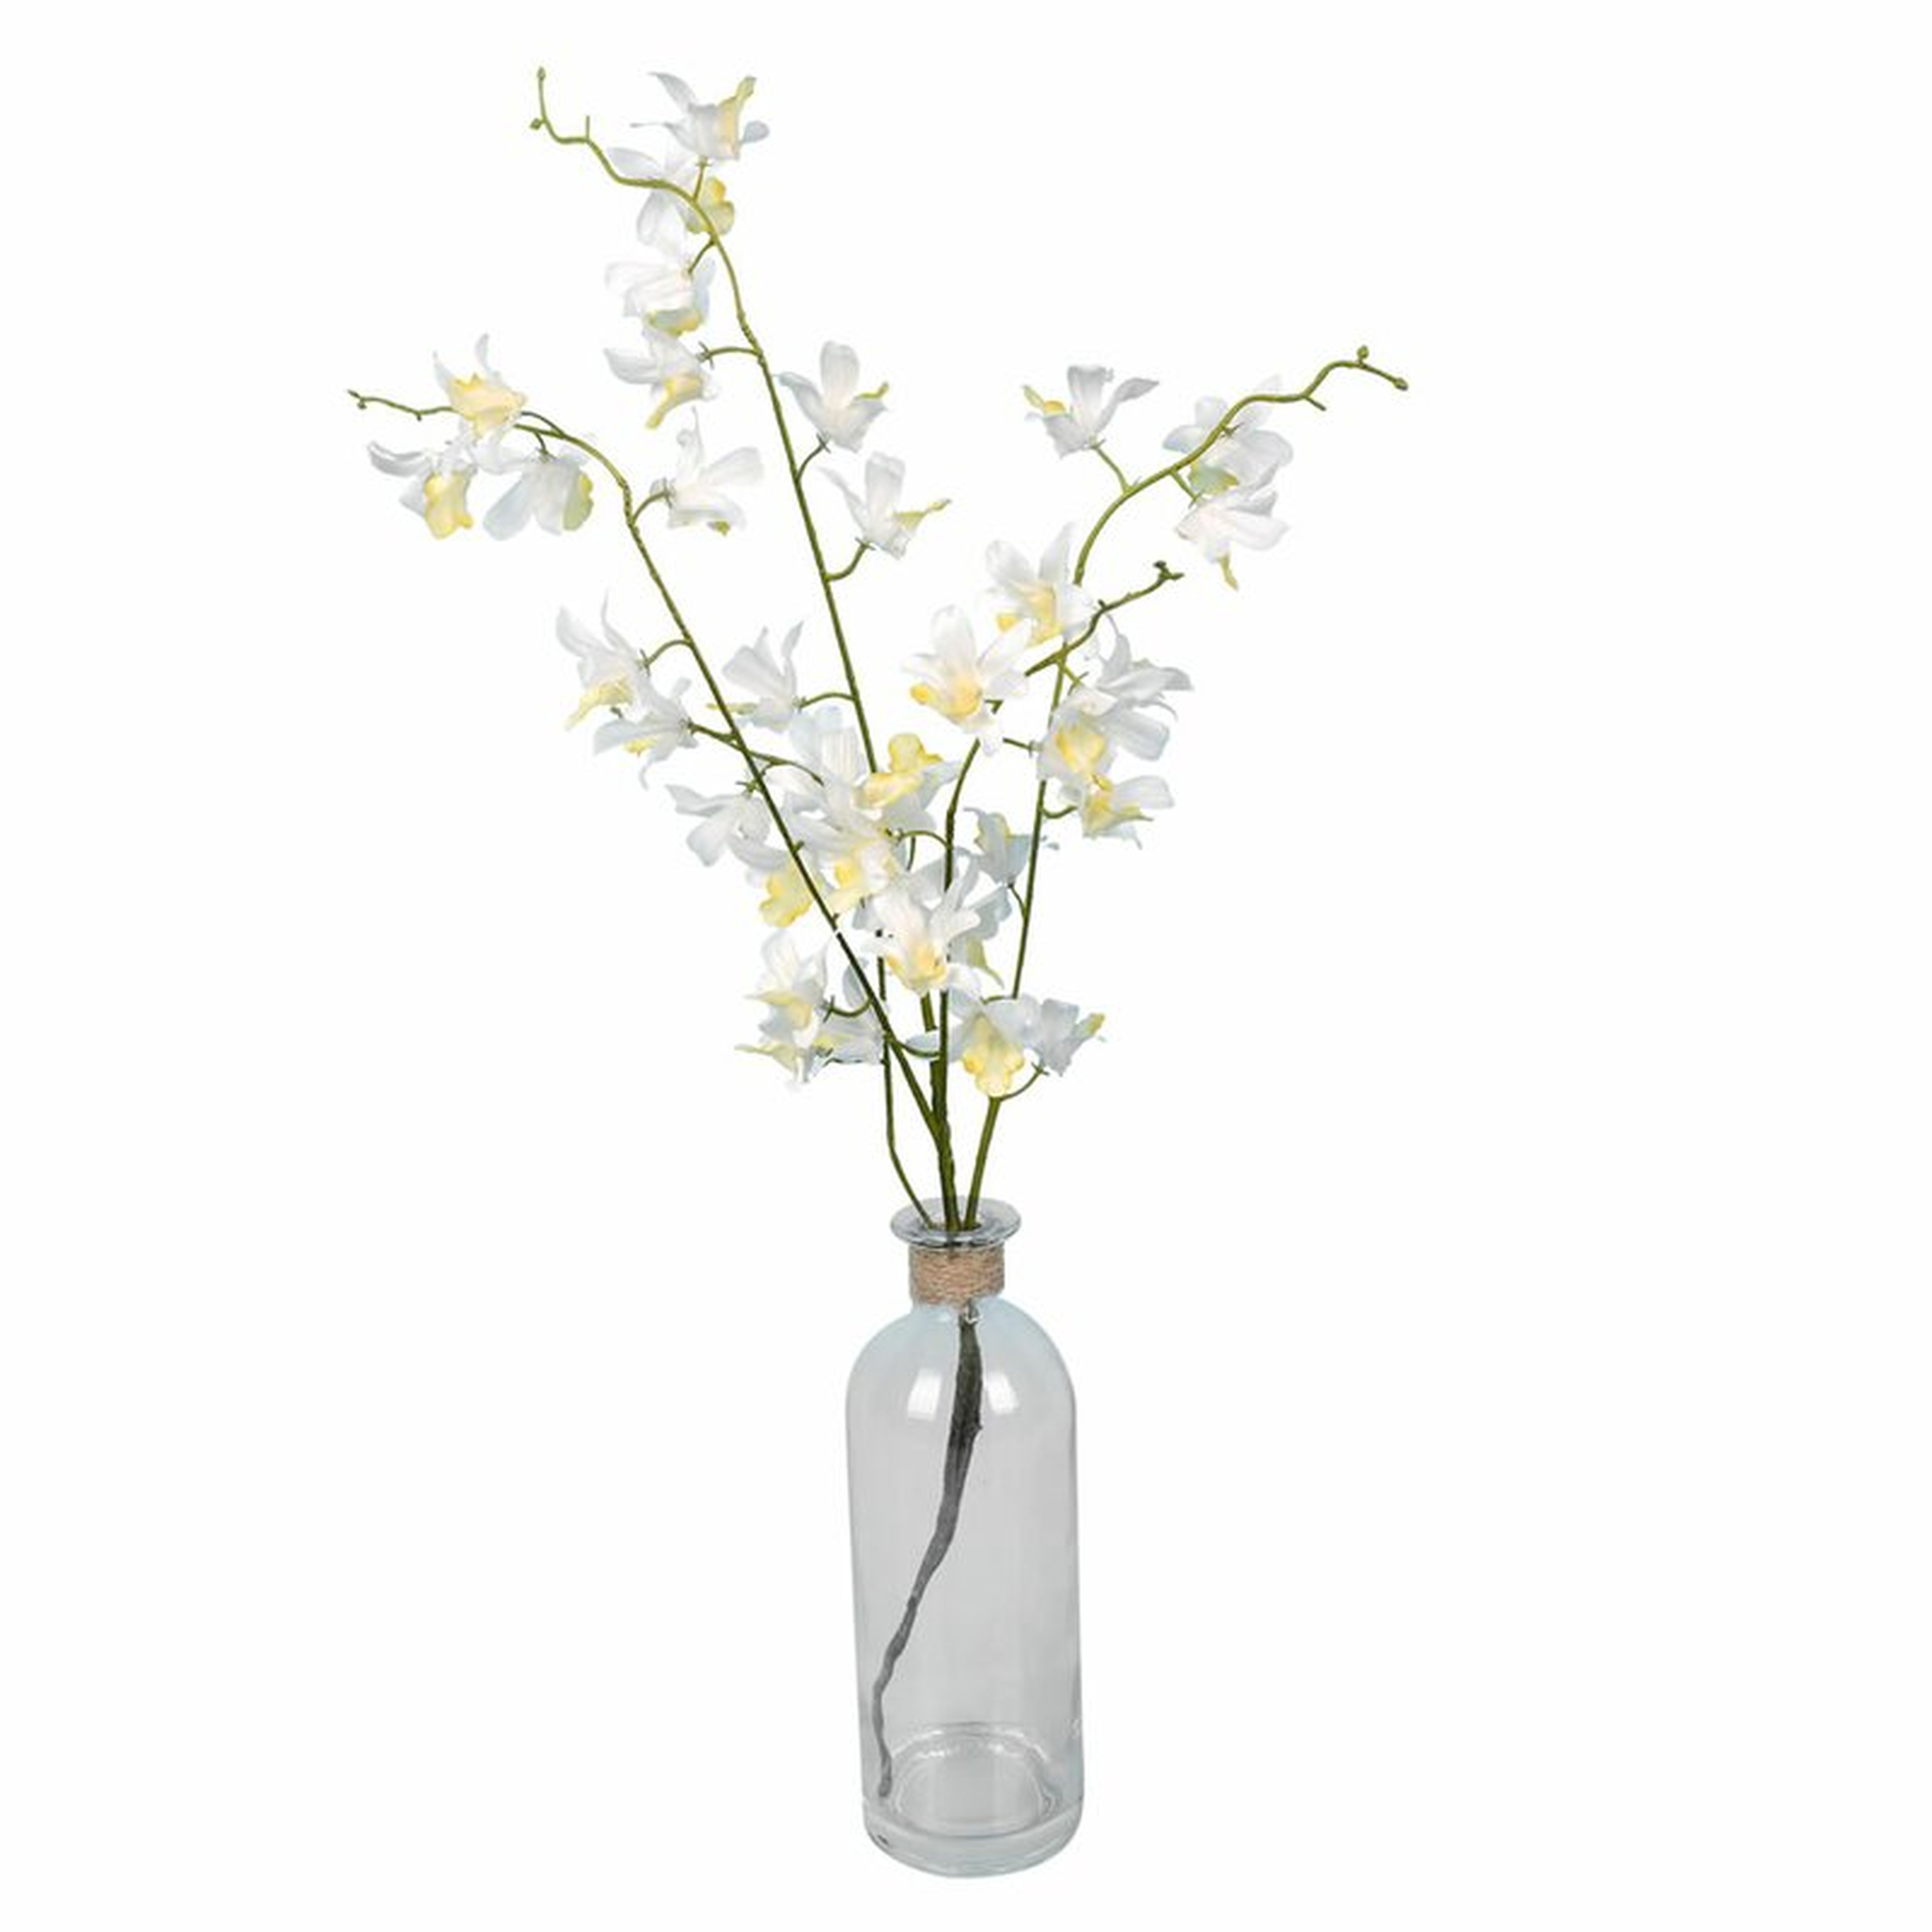 Orchids Floral Arrangements and Centerpieces in Vase - Wayfair